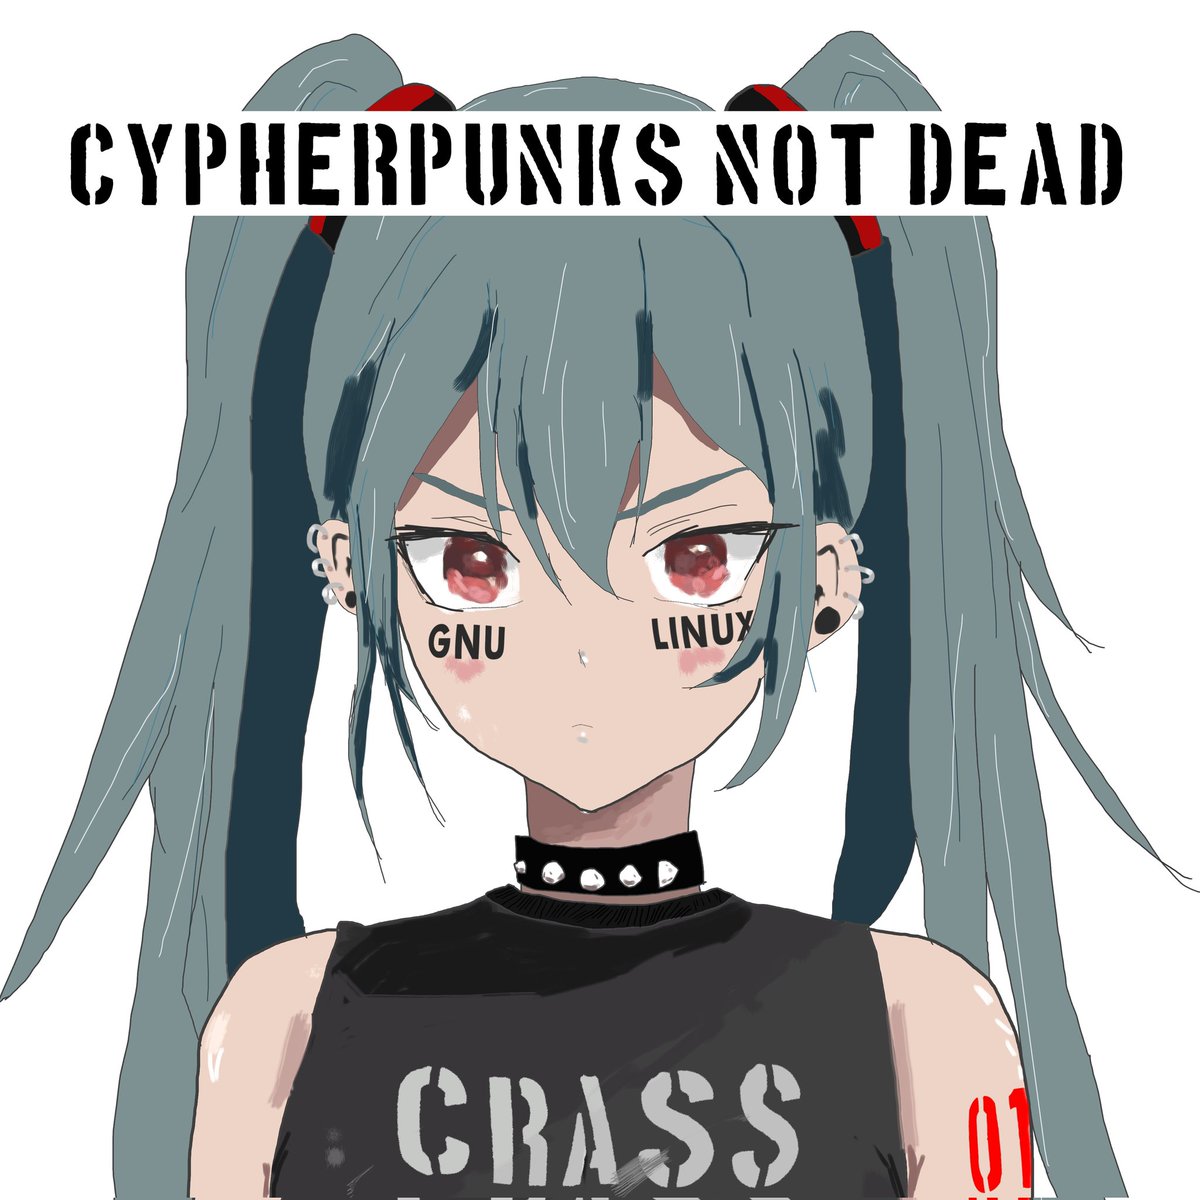 CYPHERPUNKS NOT DEAD
#初音ミク #linux #gnulinux